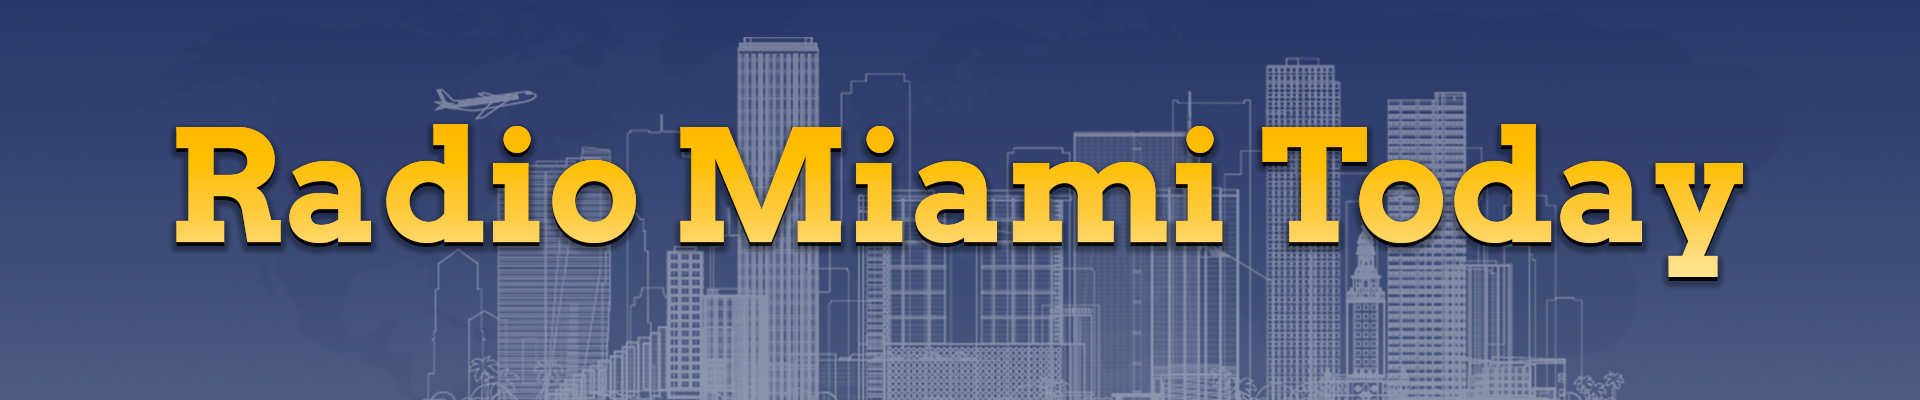 Banner Radio Miami TV